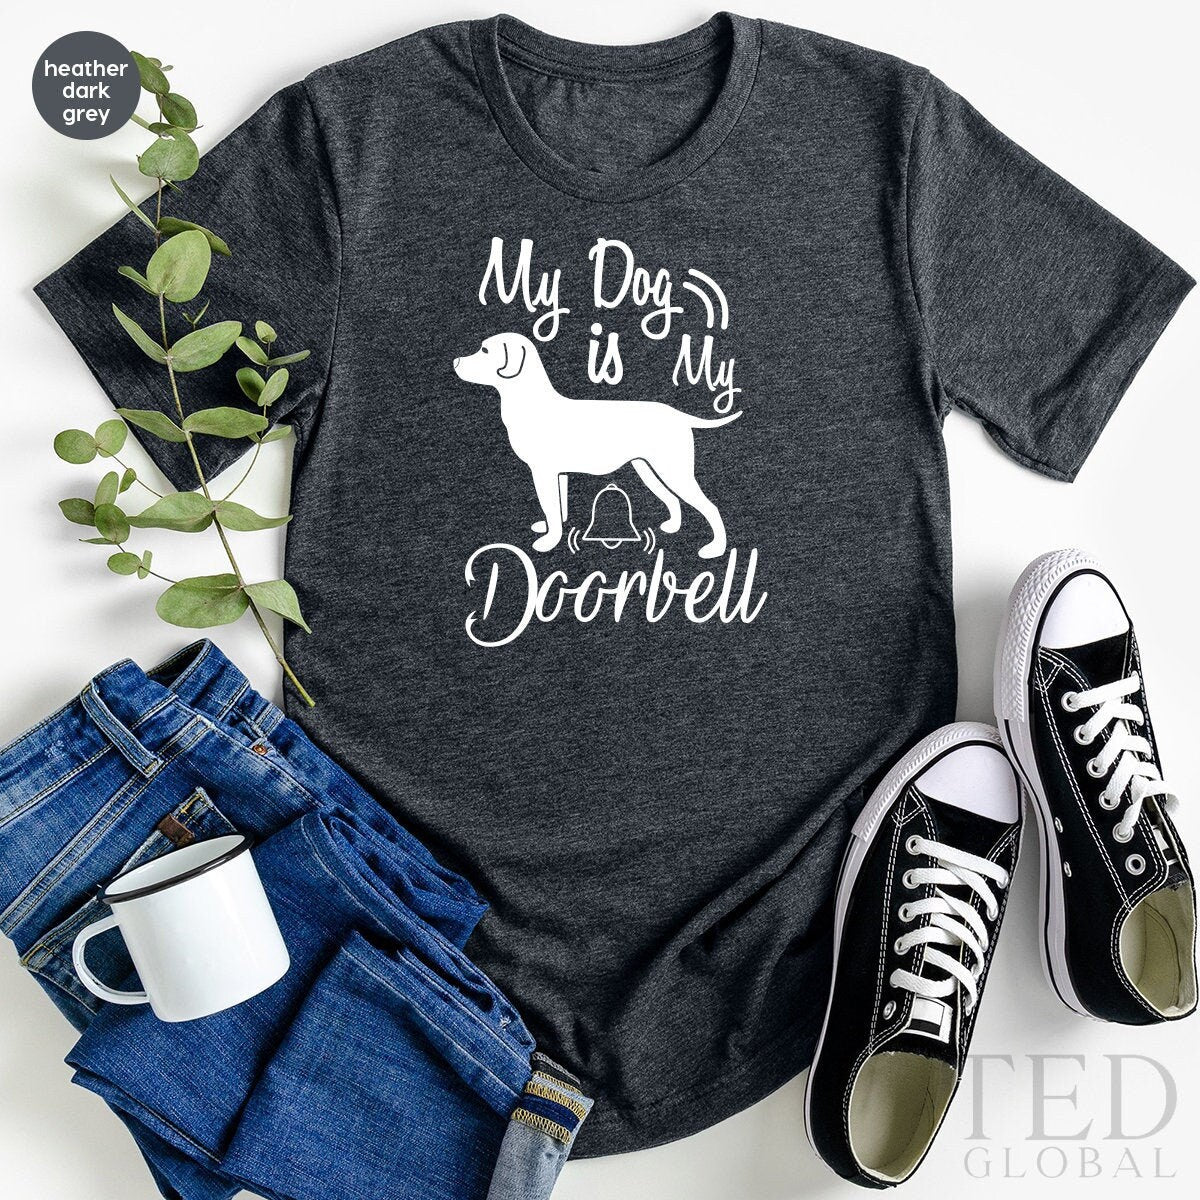 Dog Dad Shirt, Dog Owner T Shirt, Funny Dog Mom T-Shirt, Dog Parent Gift, Pet Lover Shirt, Animal Recue Shirt, My Dog Is My Doorbell Tees - Fastdeliverytees.com